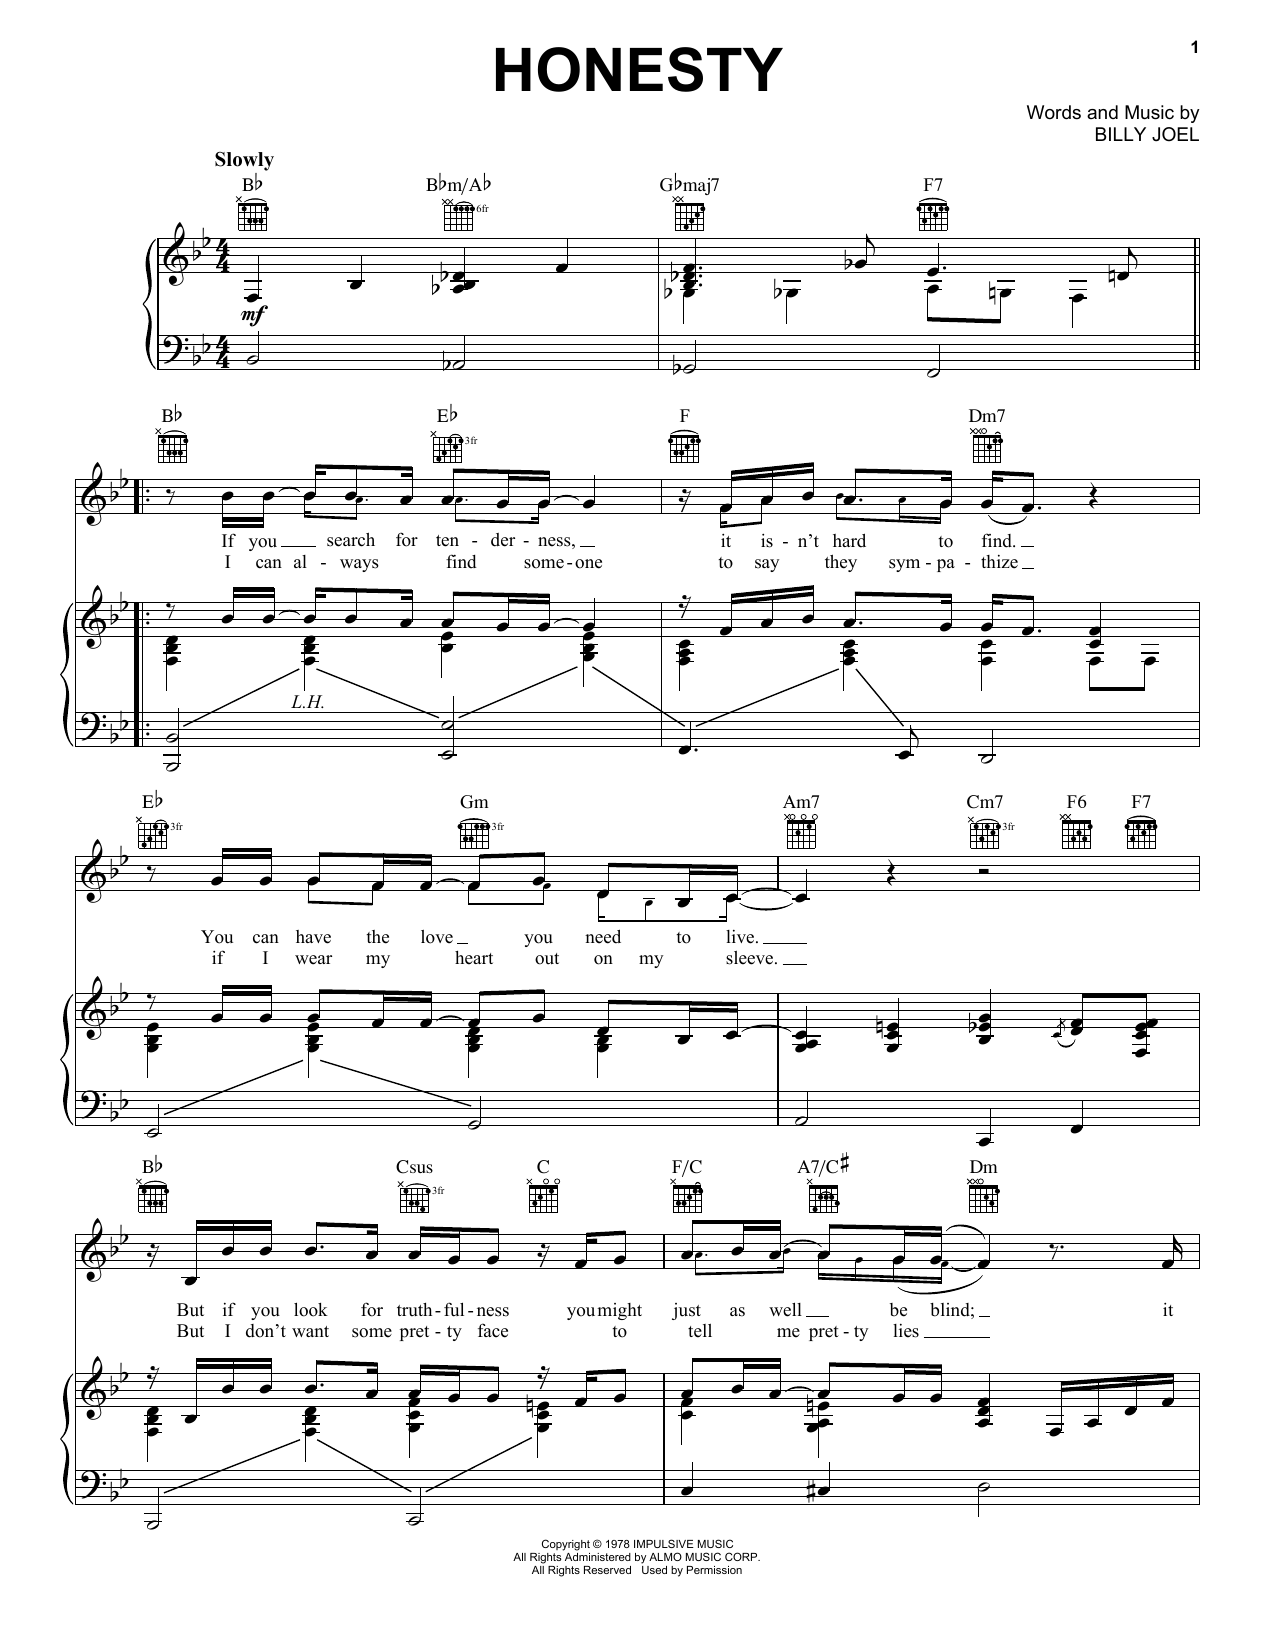 Billy Joel Honesty Sheet Music Notes & Chords for Real Book – Melody, Lyrics & Chords - Download or Print PDF